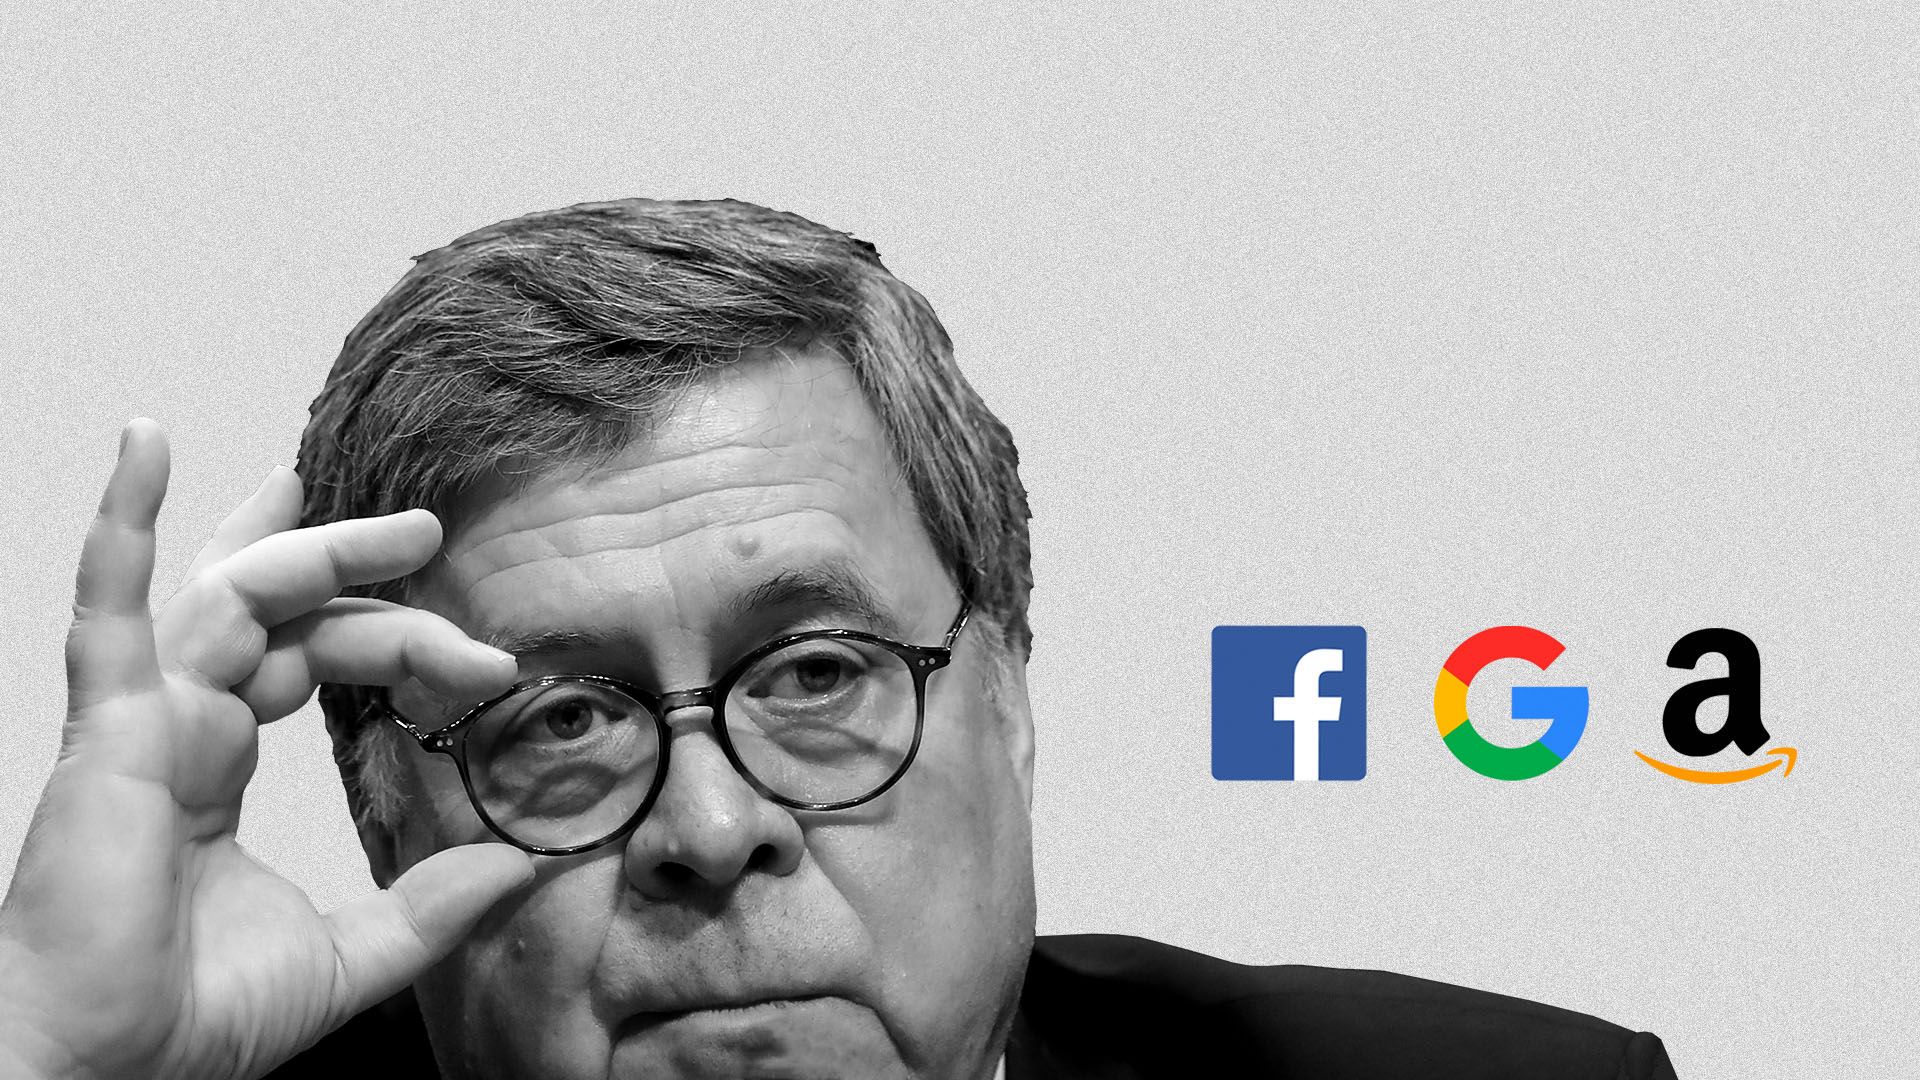 Illustration of Bill Barr scrutinizing logos of Facebook, Google, and Amazon